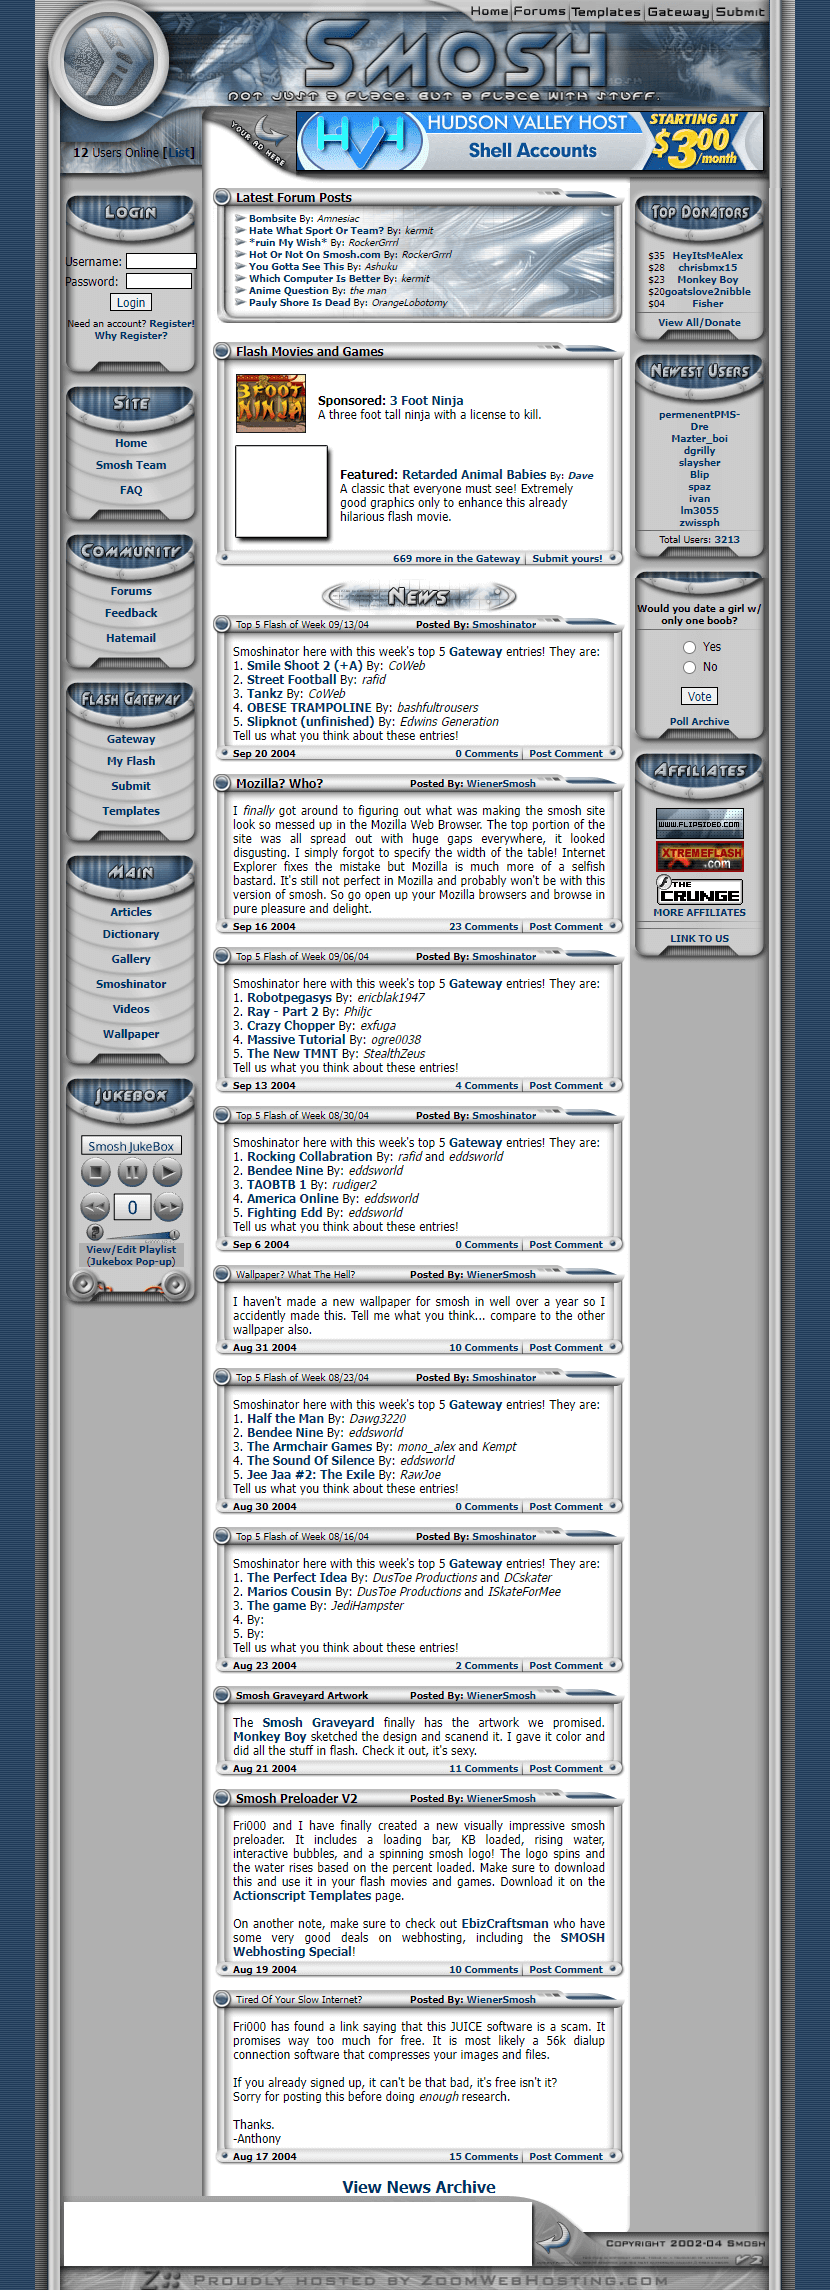 Smosh website in 2004